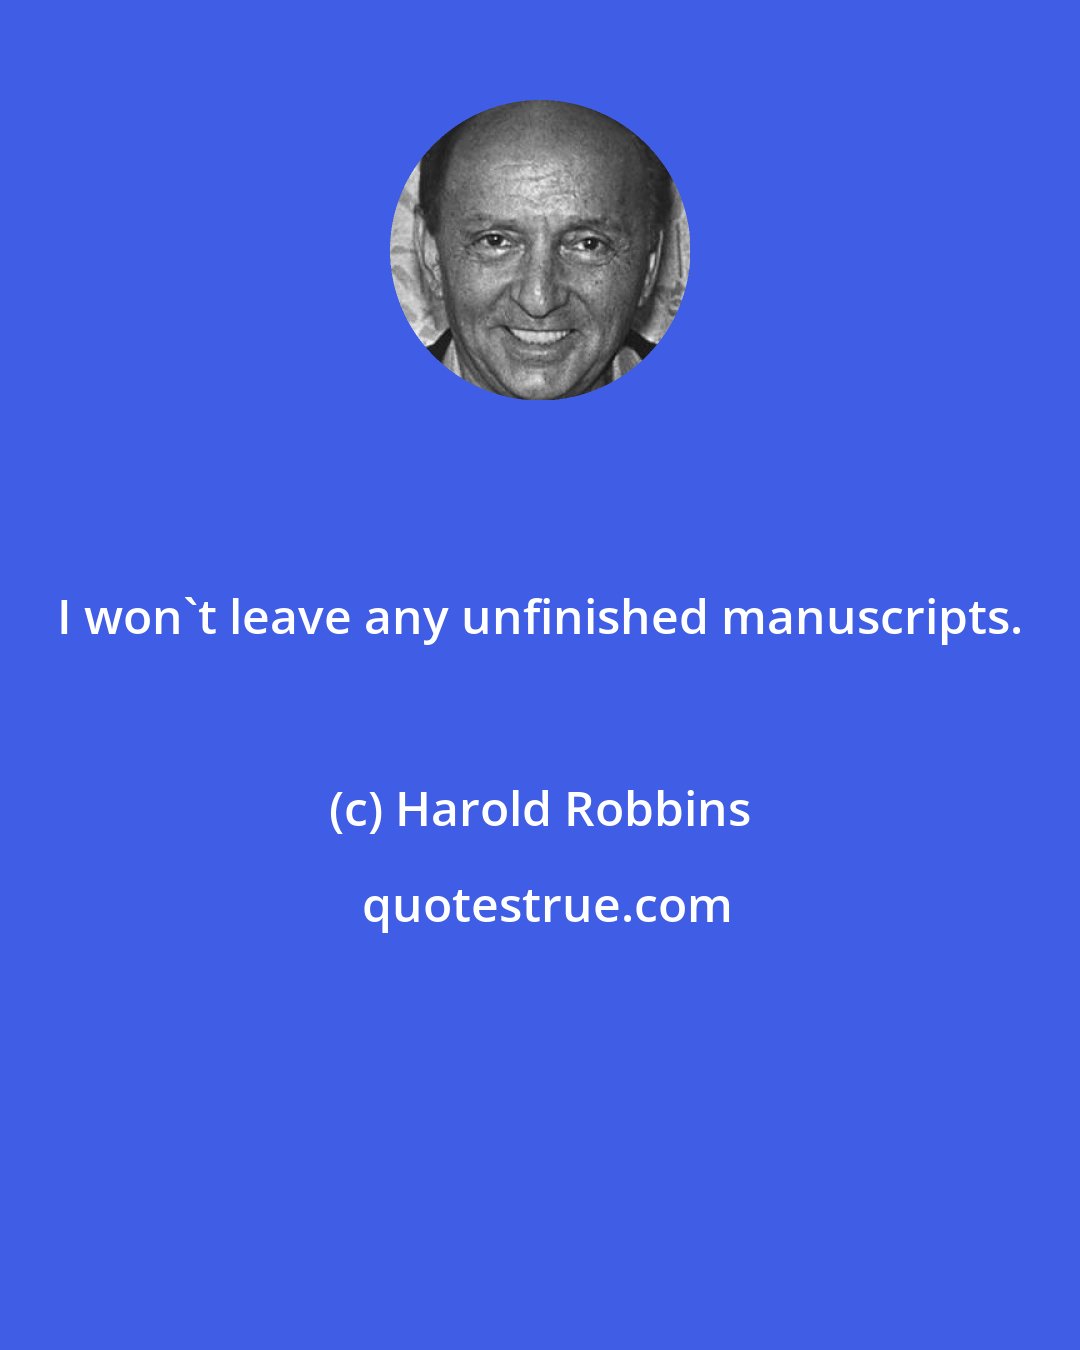 Harold Robbins: I won't leave any unfinished manuscripts.